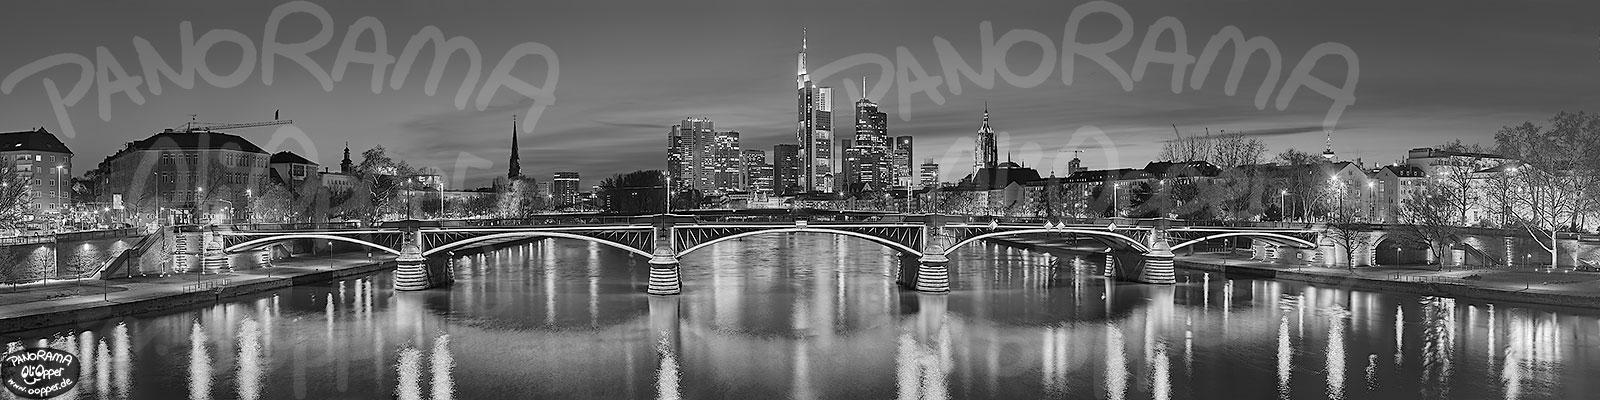 Frankfurt - s/w - Nacht - p8322 - (c) by Oliver Opper